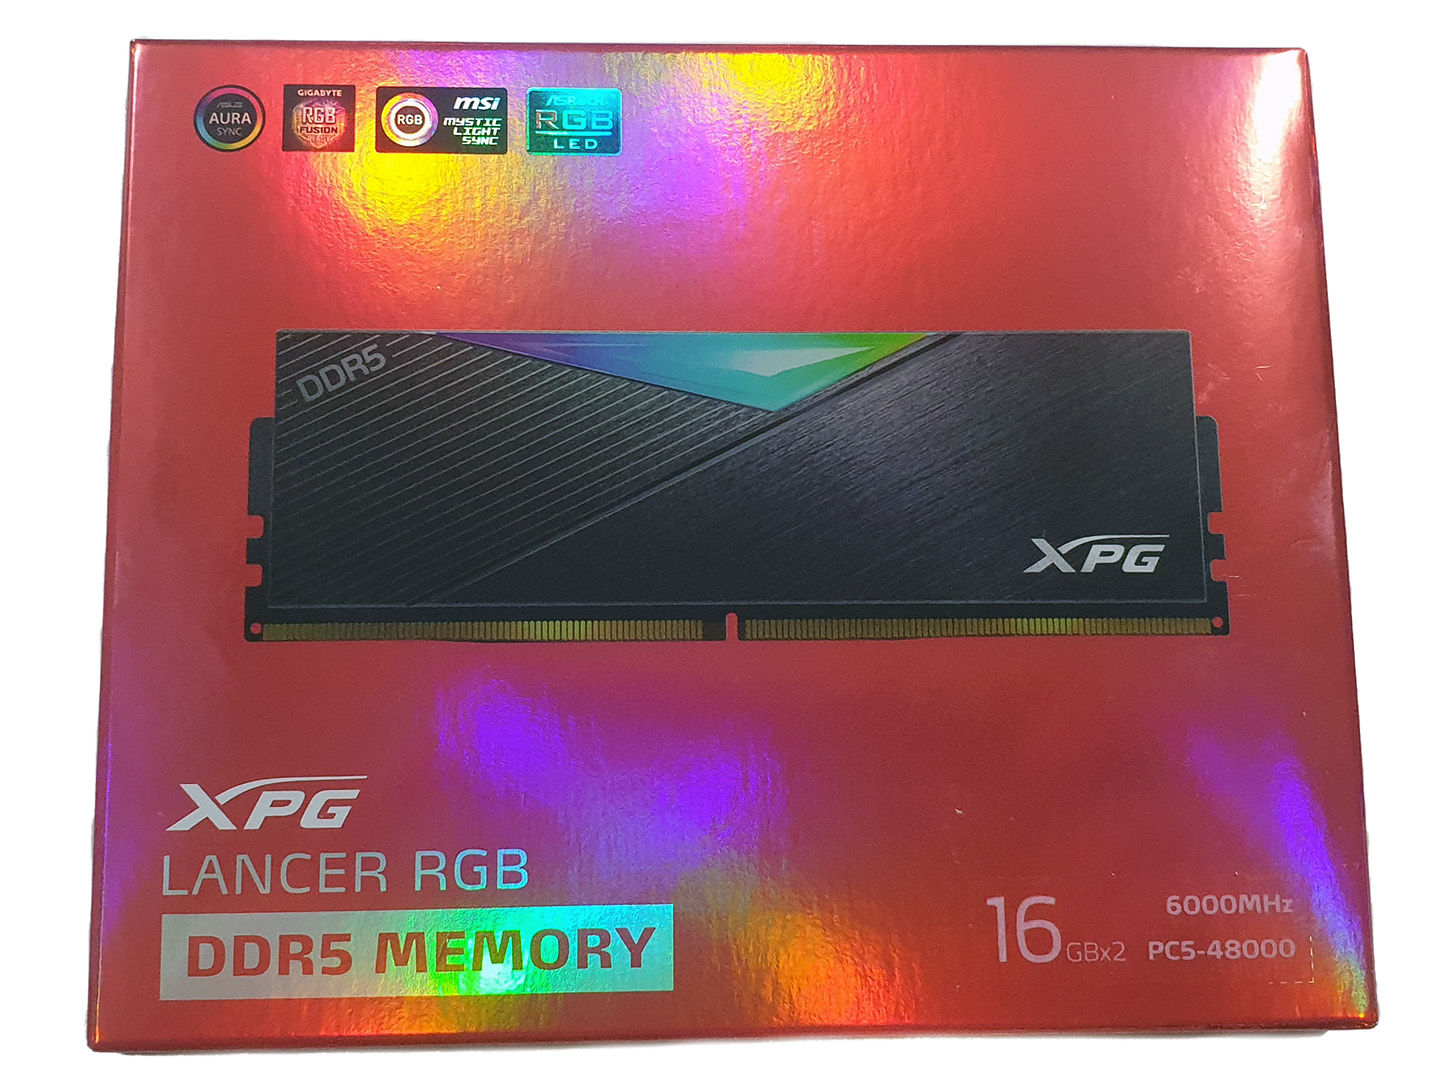 XPG Lancer RGB DDR5-6000 2x16GB Memory Kit Review | LaptrinhX / News